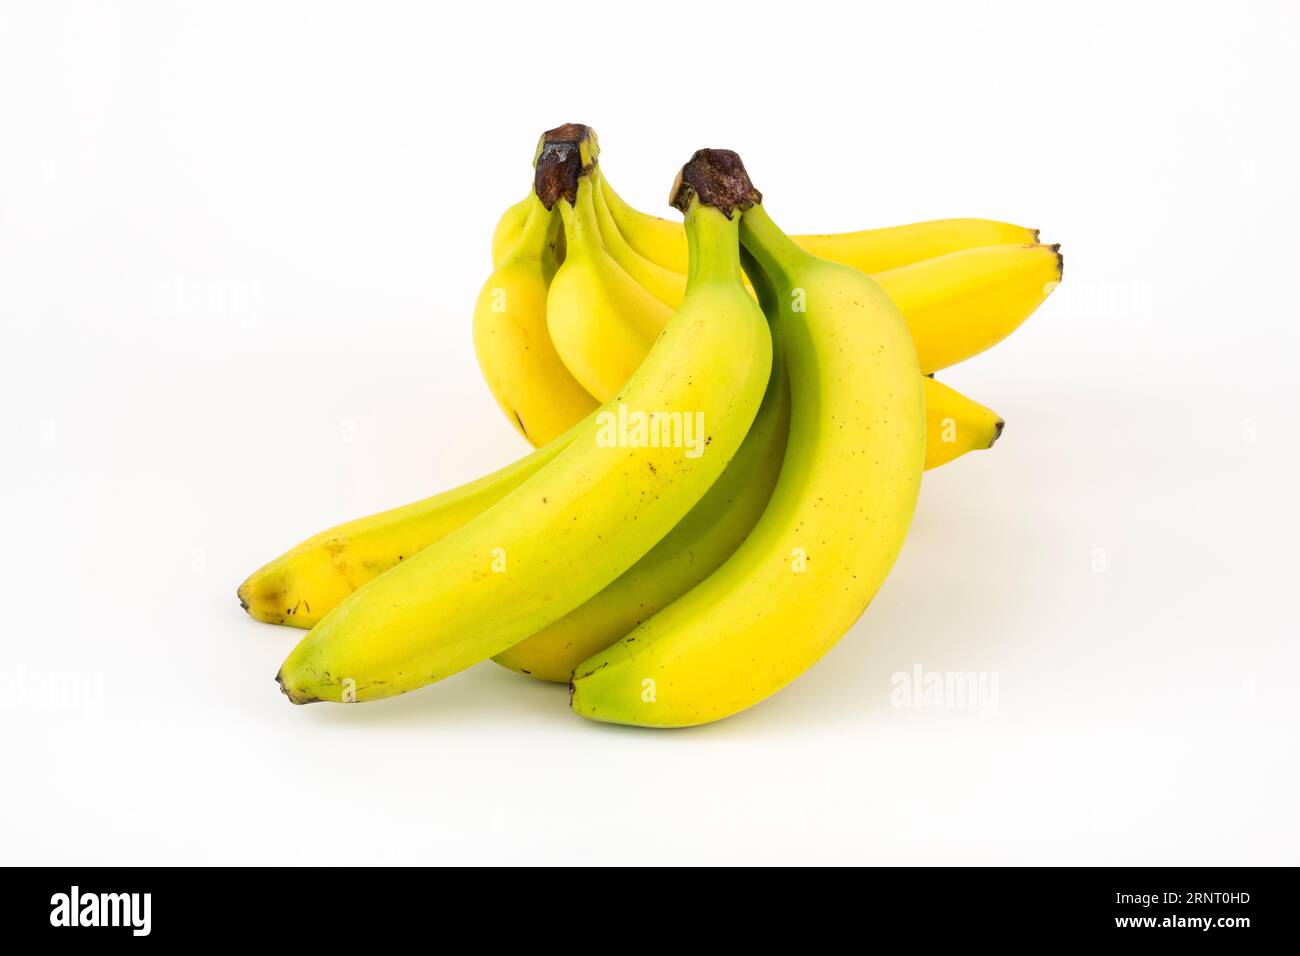 https://c8.alamy.com/comp/2RNT0HD/unripe-and-ripe-bananas-studio-shot-white-background-healthy-diet-2RNT0HD.jpg